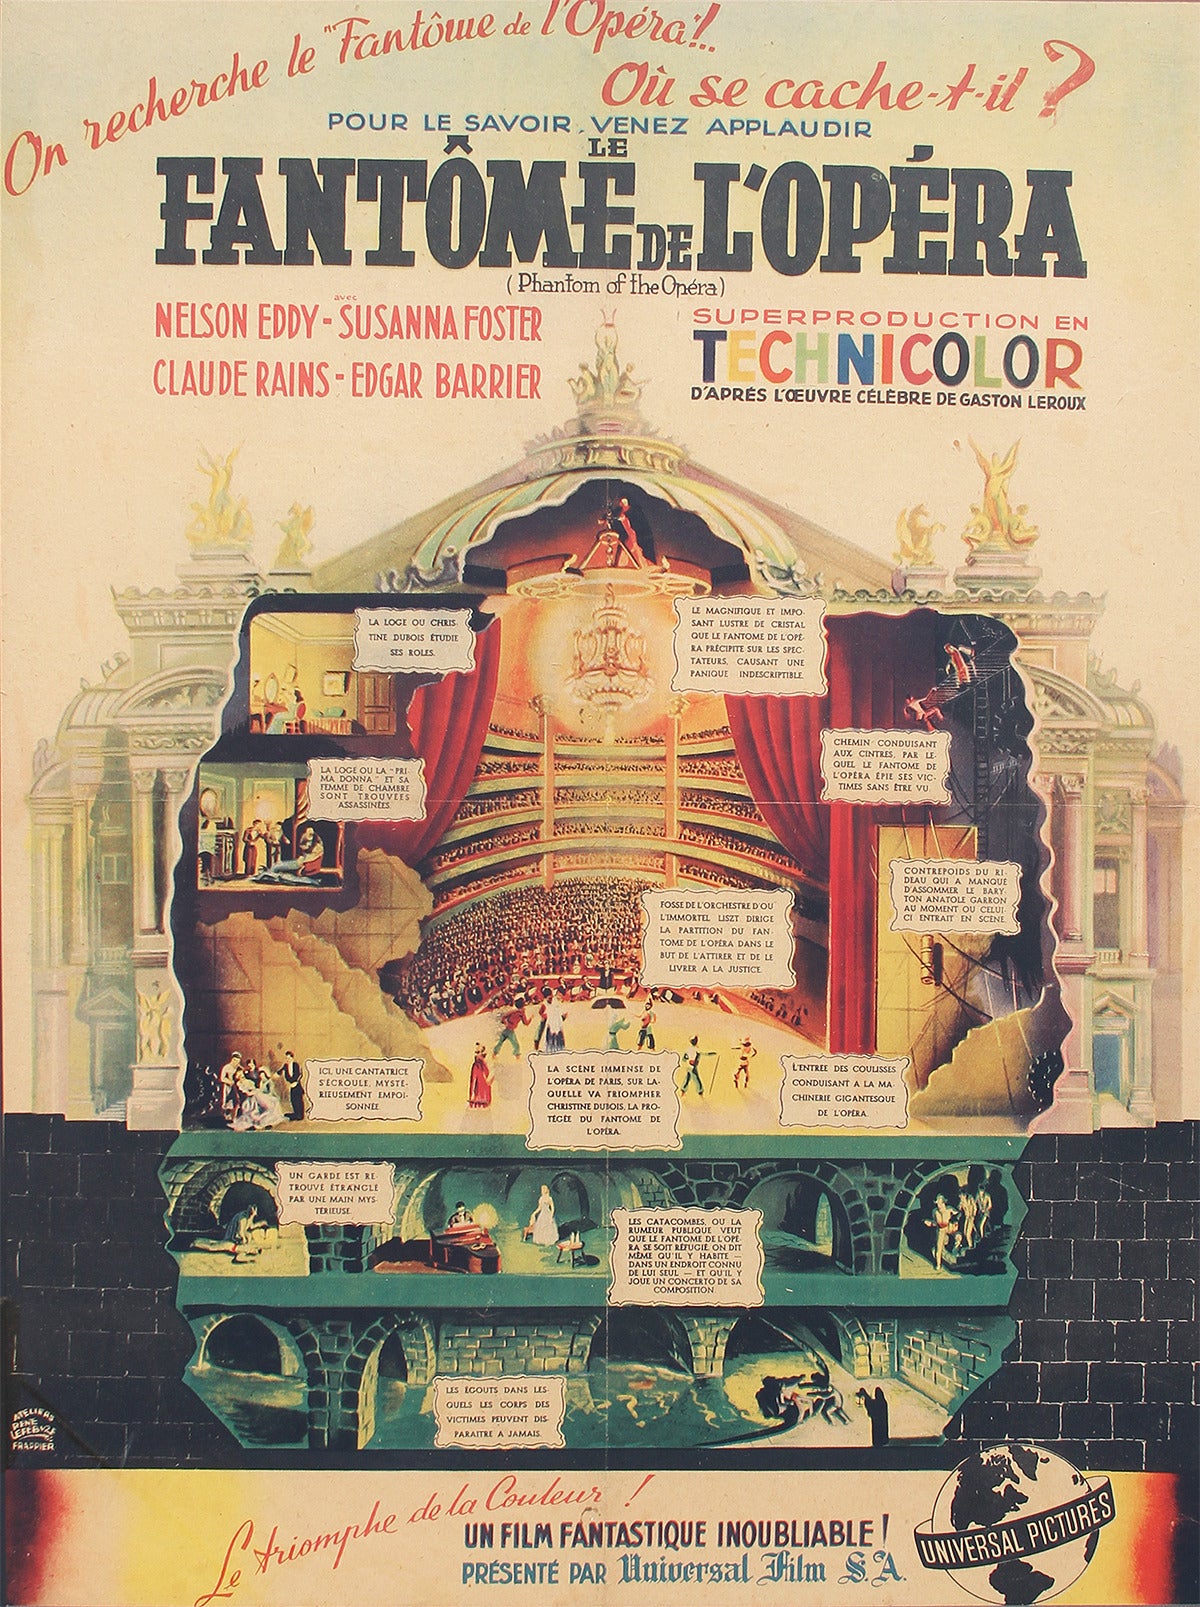 Original lithograph in colors titled “Le Fantome de l'Opera ,